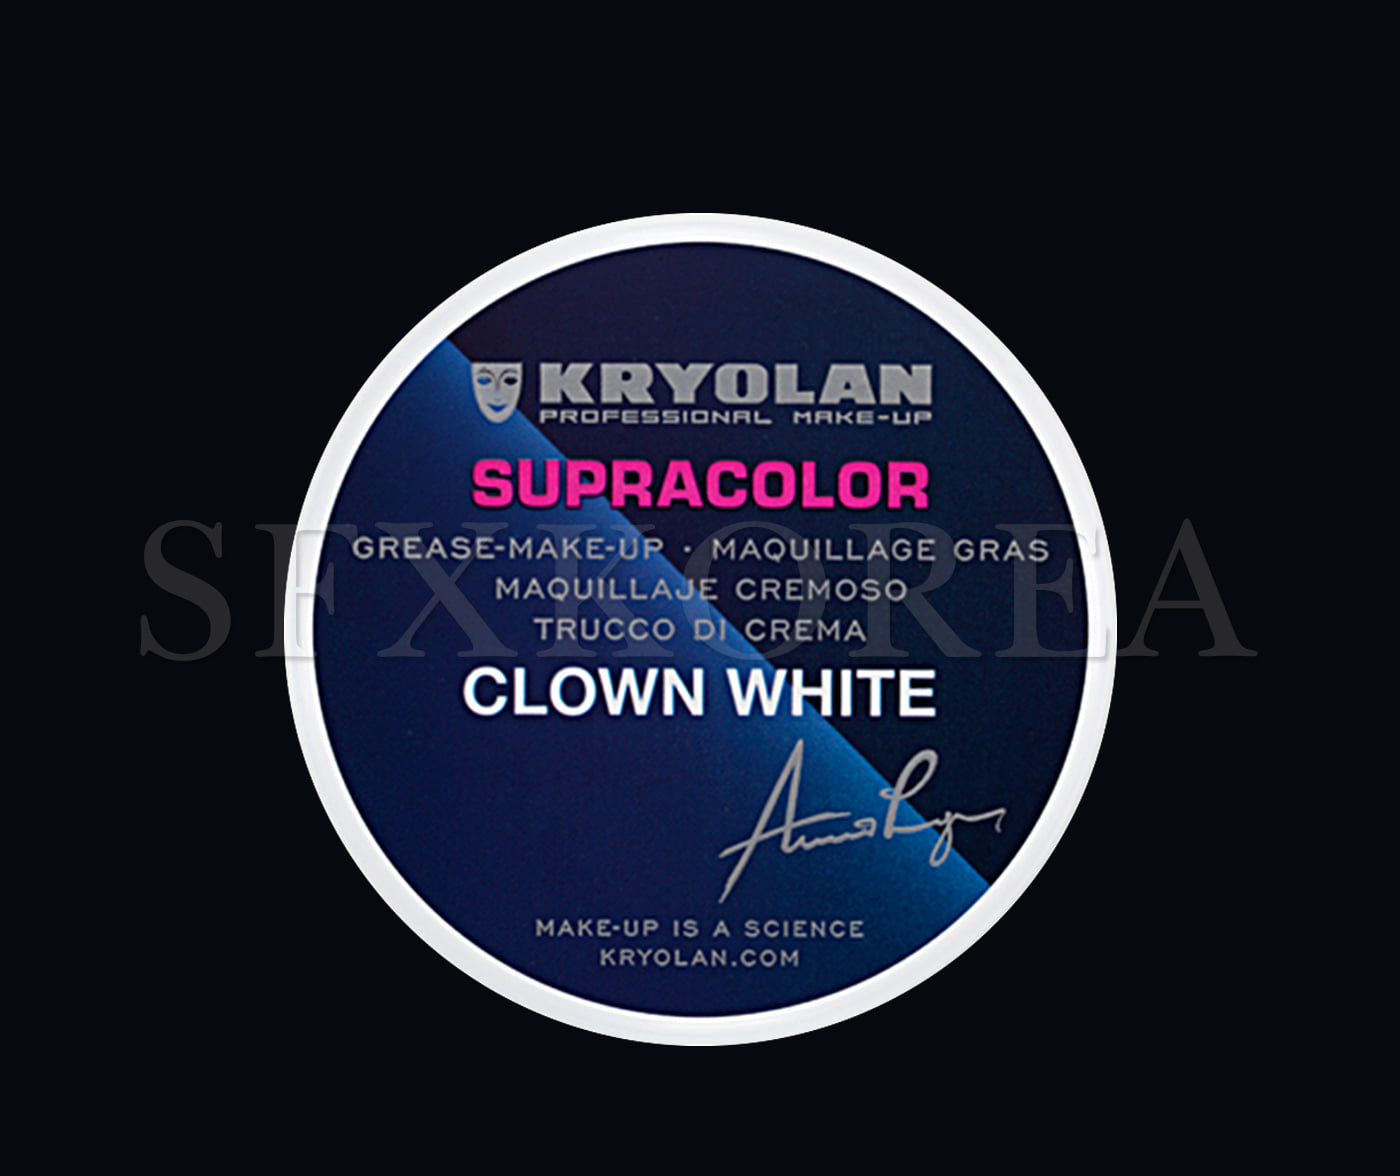 KR.수프라컬러 크라운 화이트(Supracolor Clown White)_30ml